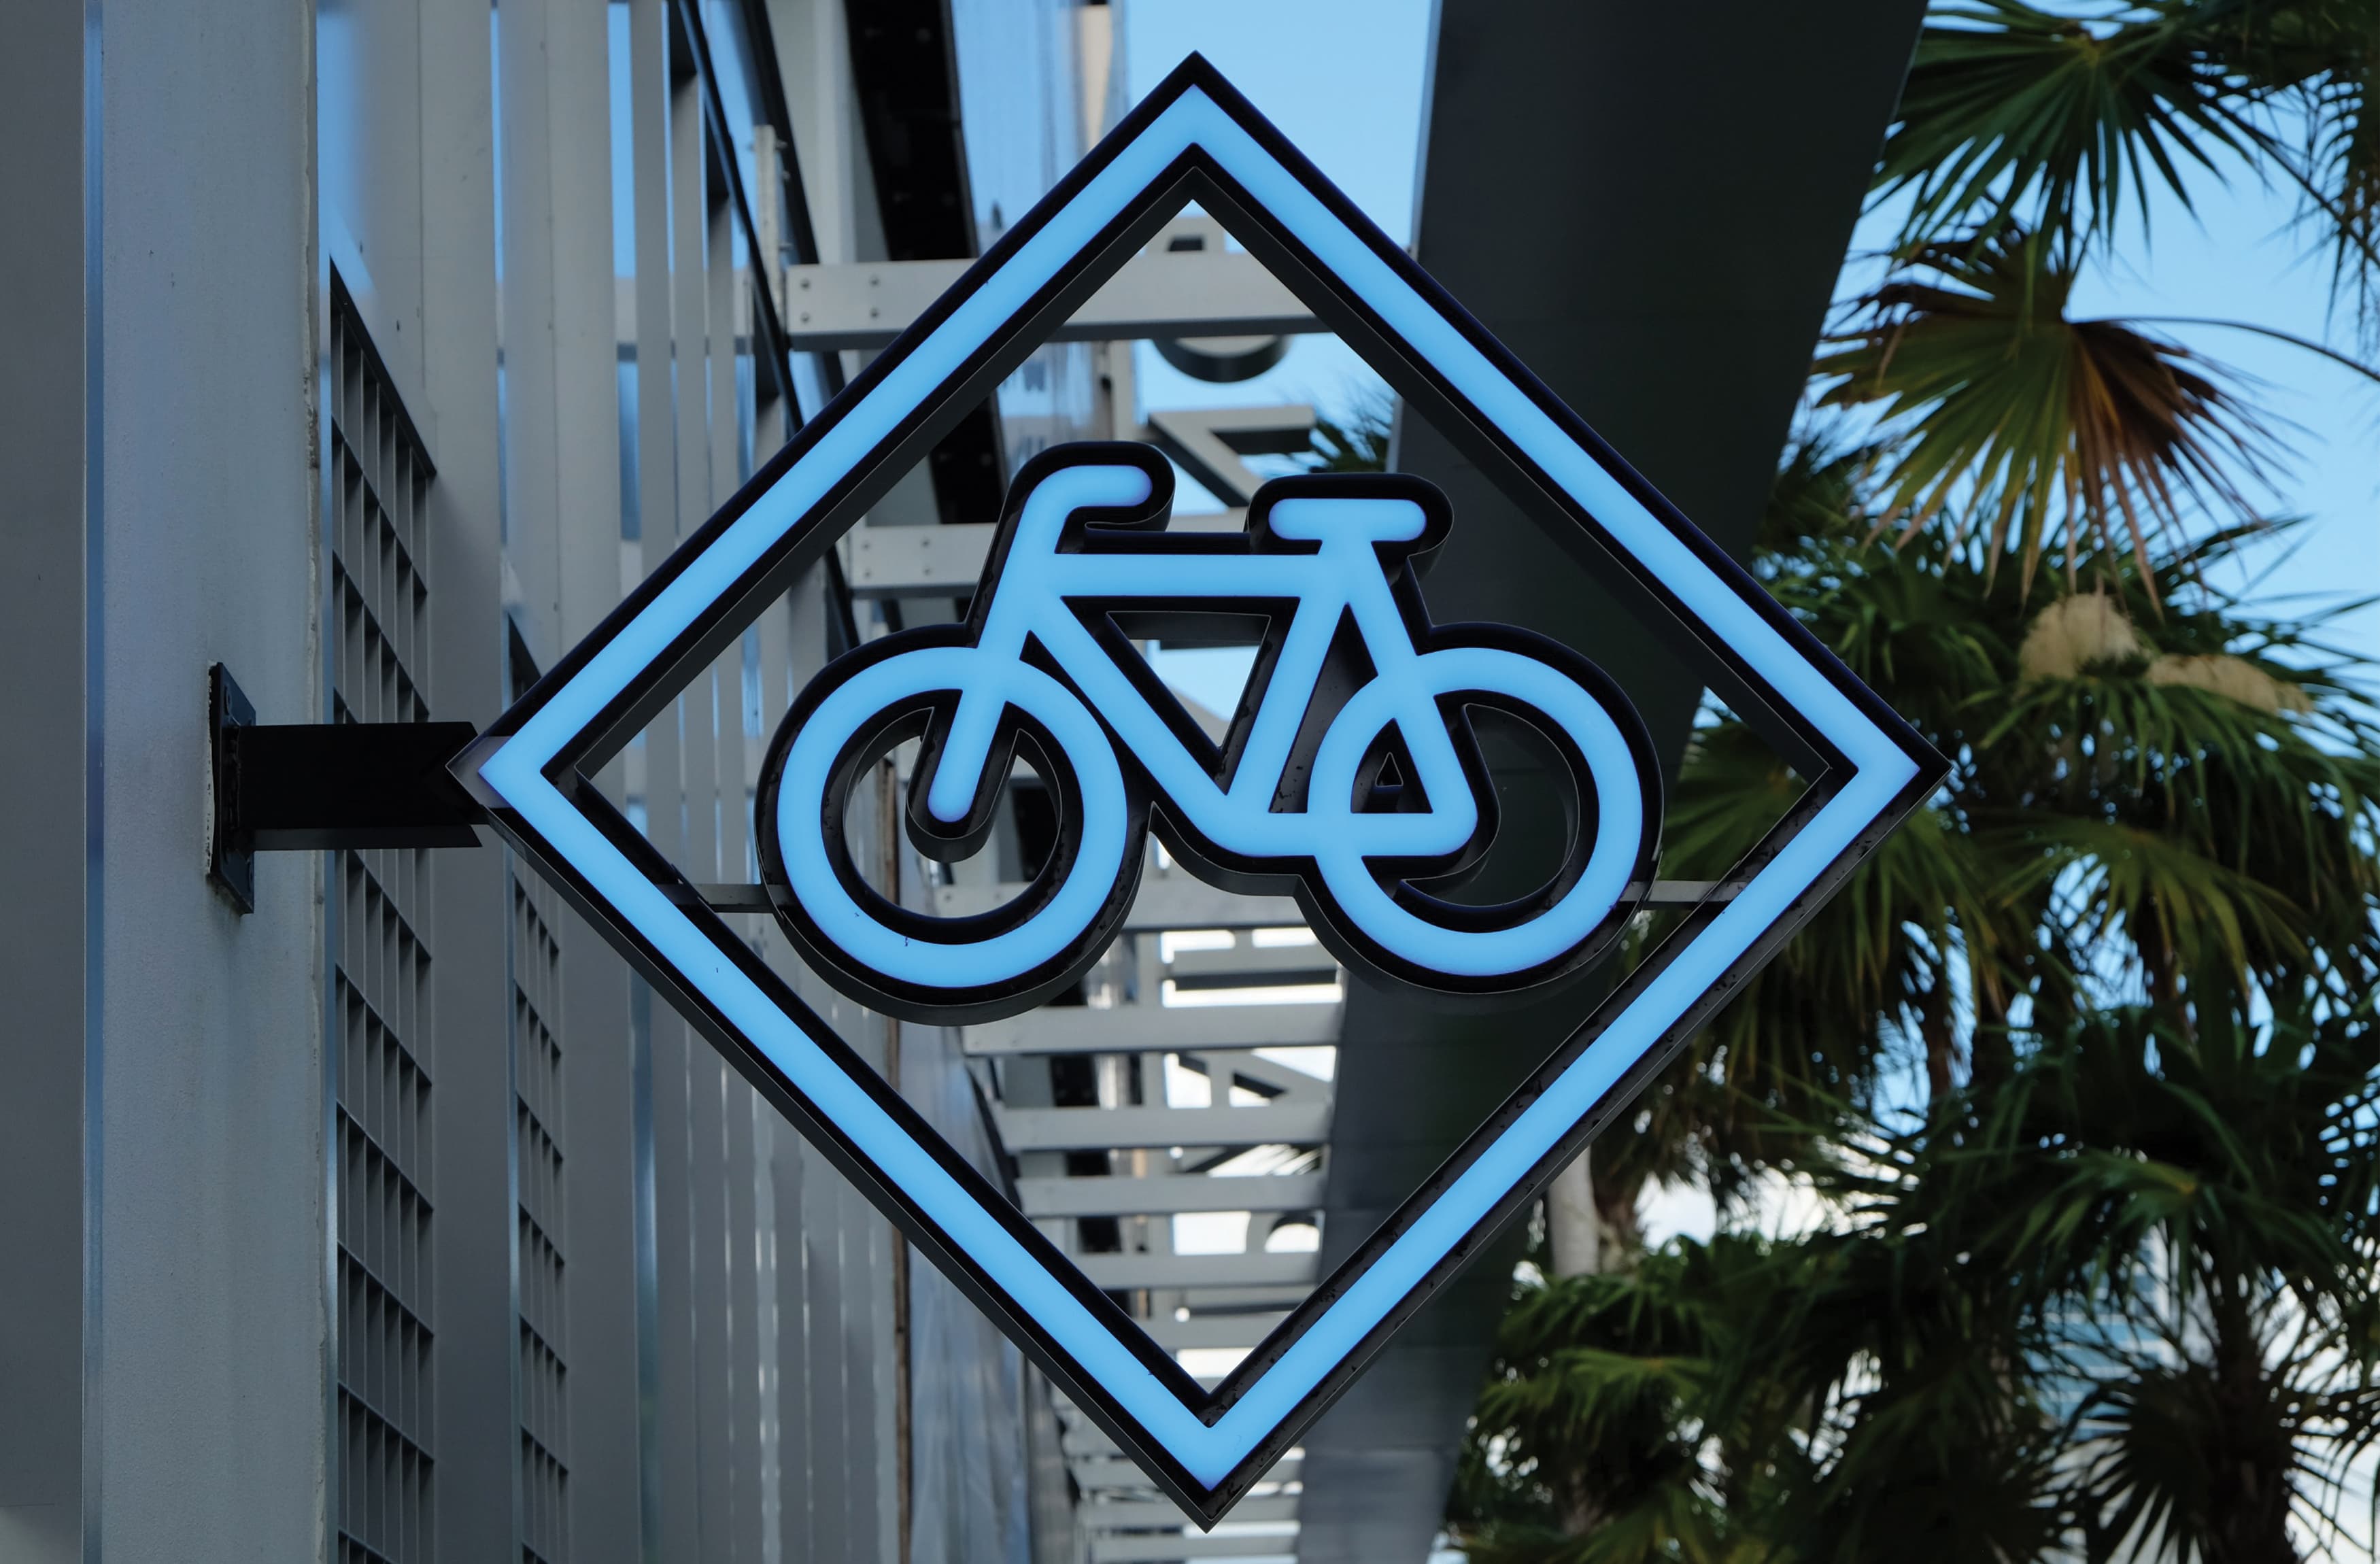 Miami Design District bike parking blade sign amenity design